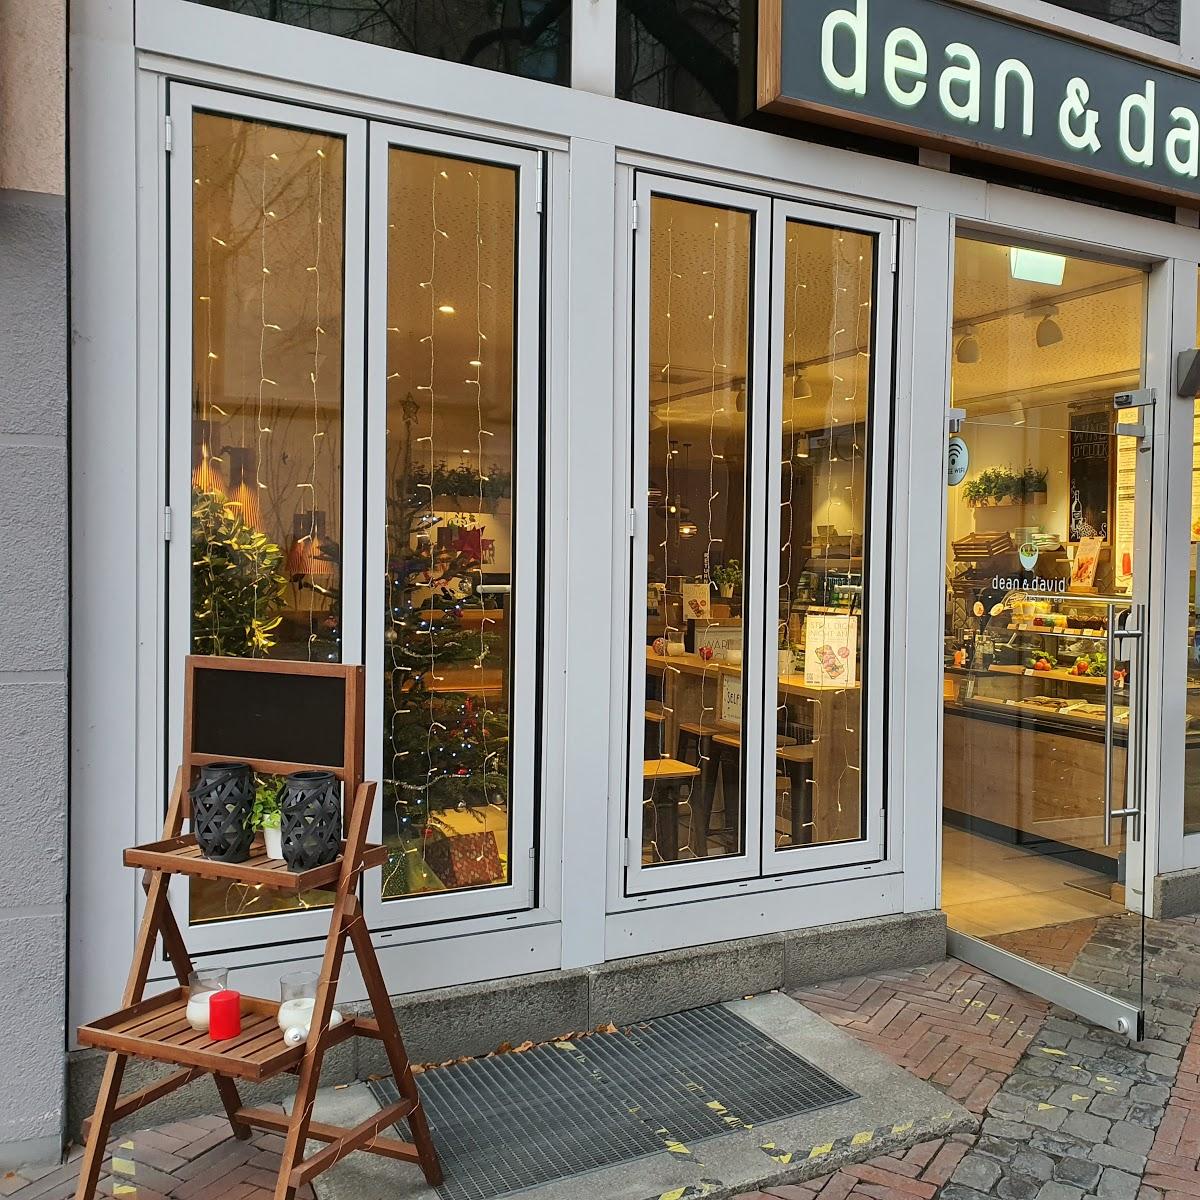 Restaurant "dean&david" in Göttingen